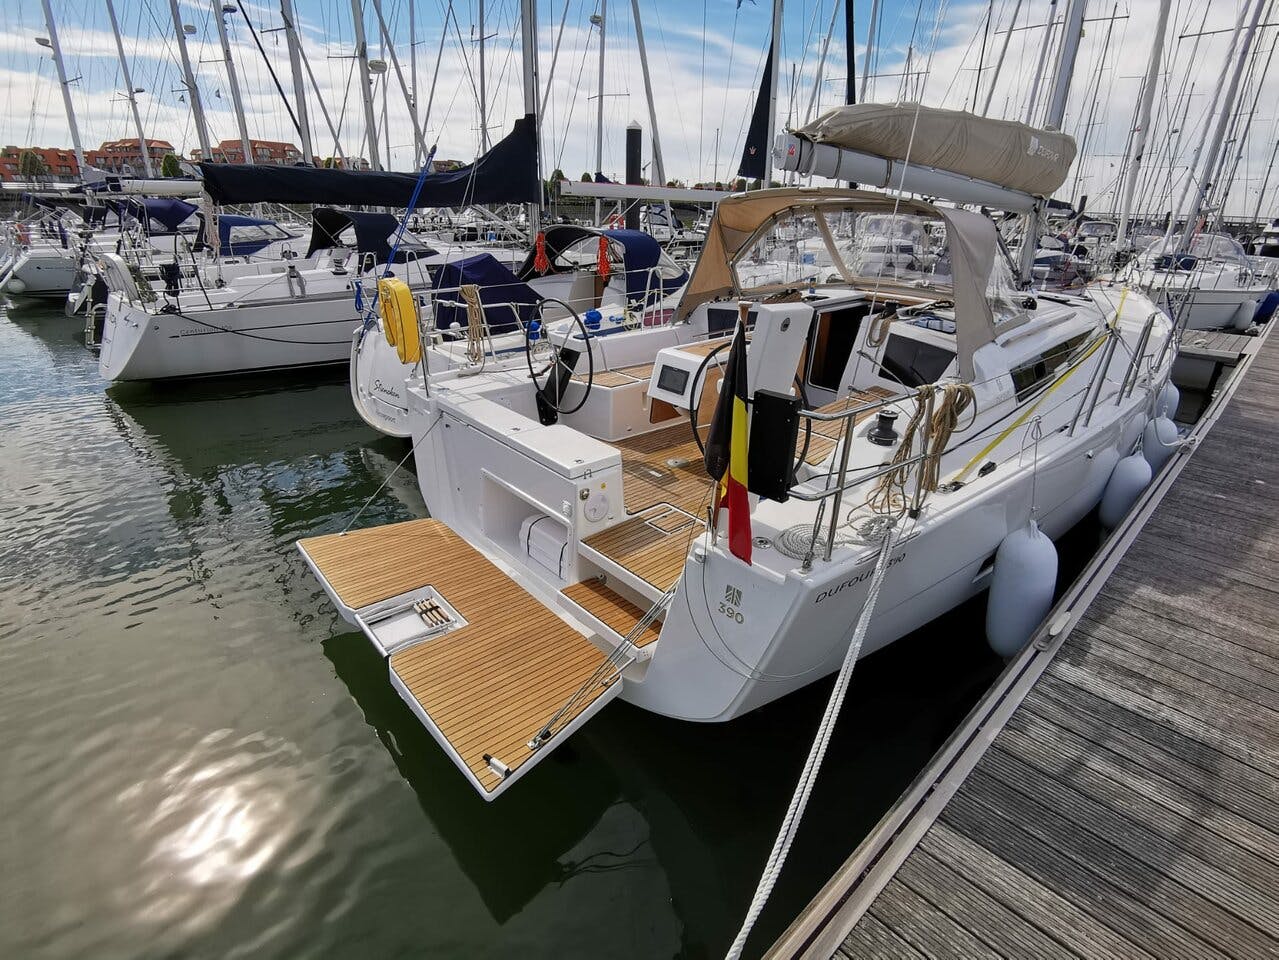 Book Dufour 390 GL Sailing yacht for bareboat charter in Nieuwpoort, Koninklijke Yacht Club, Flemish Region, Belgium with TripYacht!, picture 8